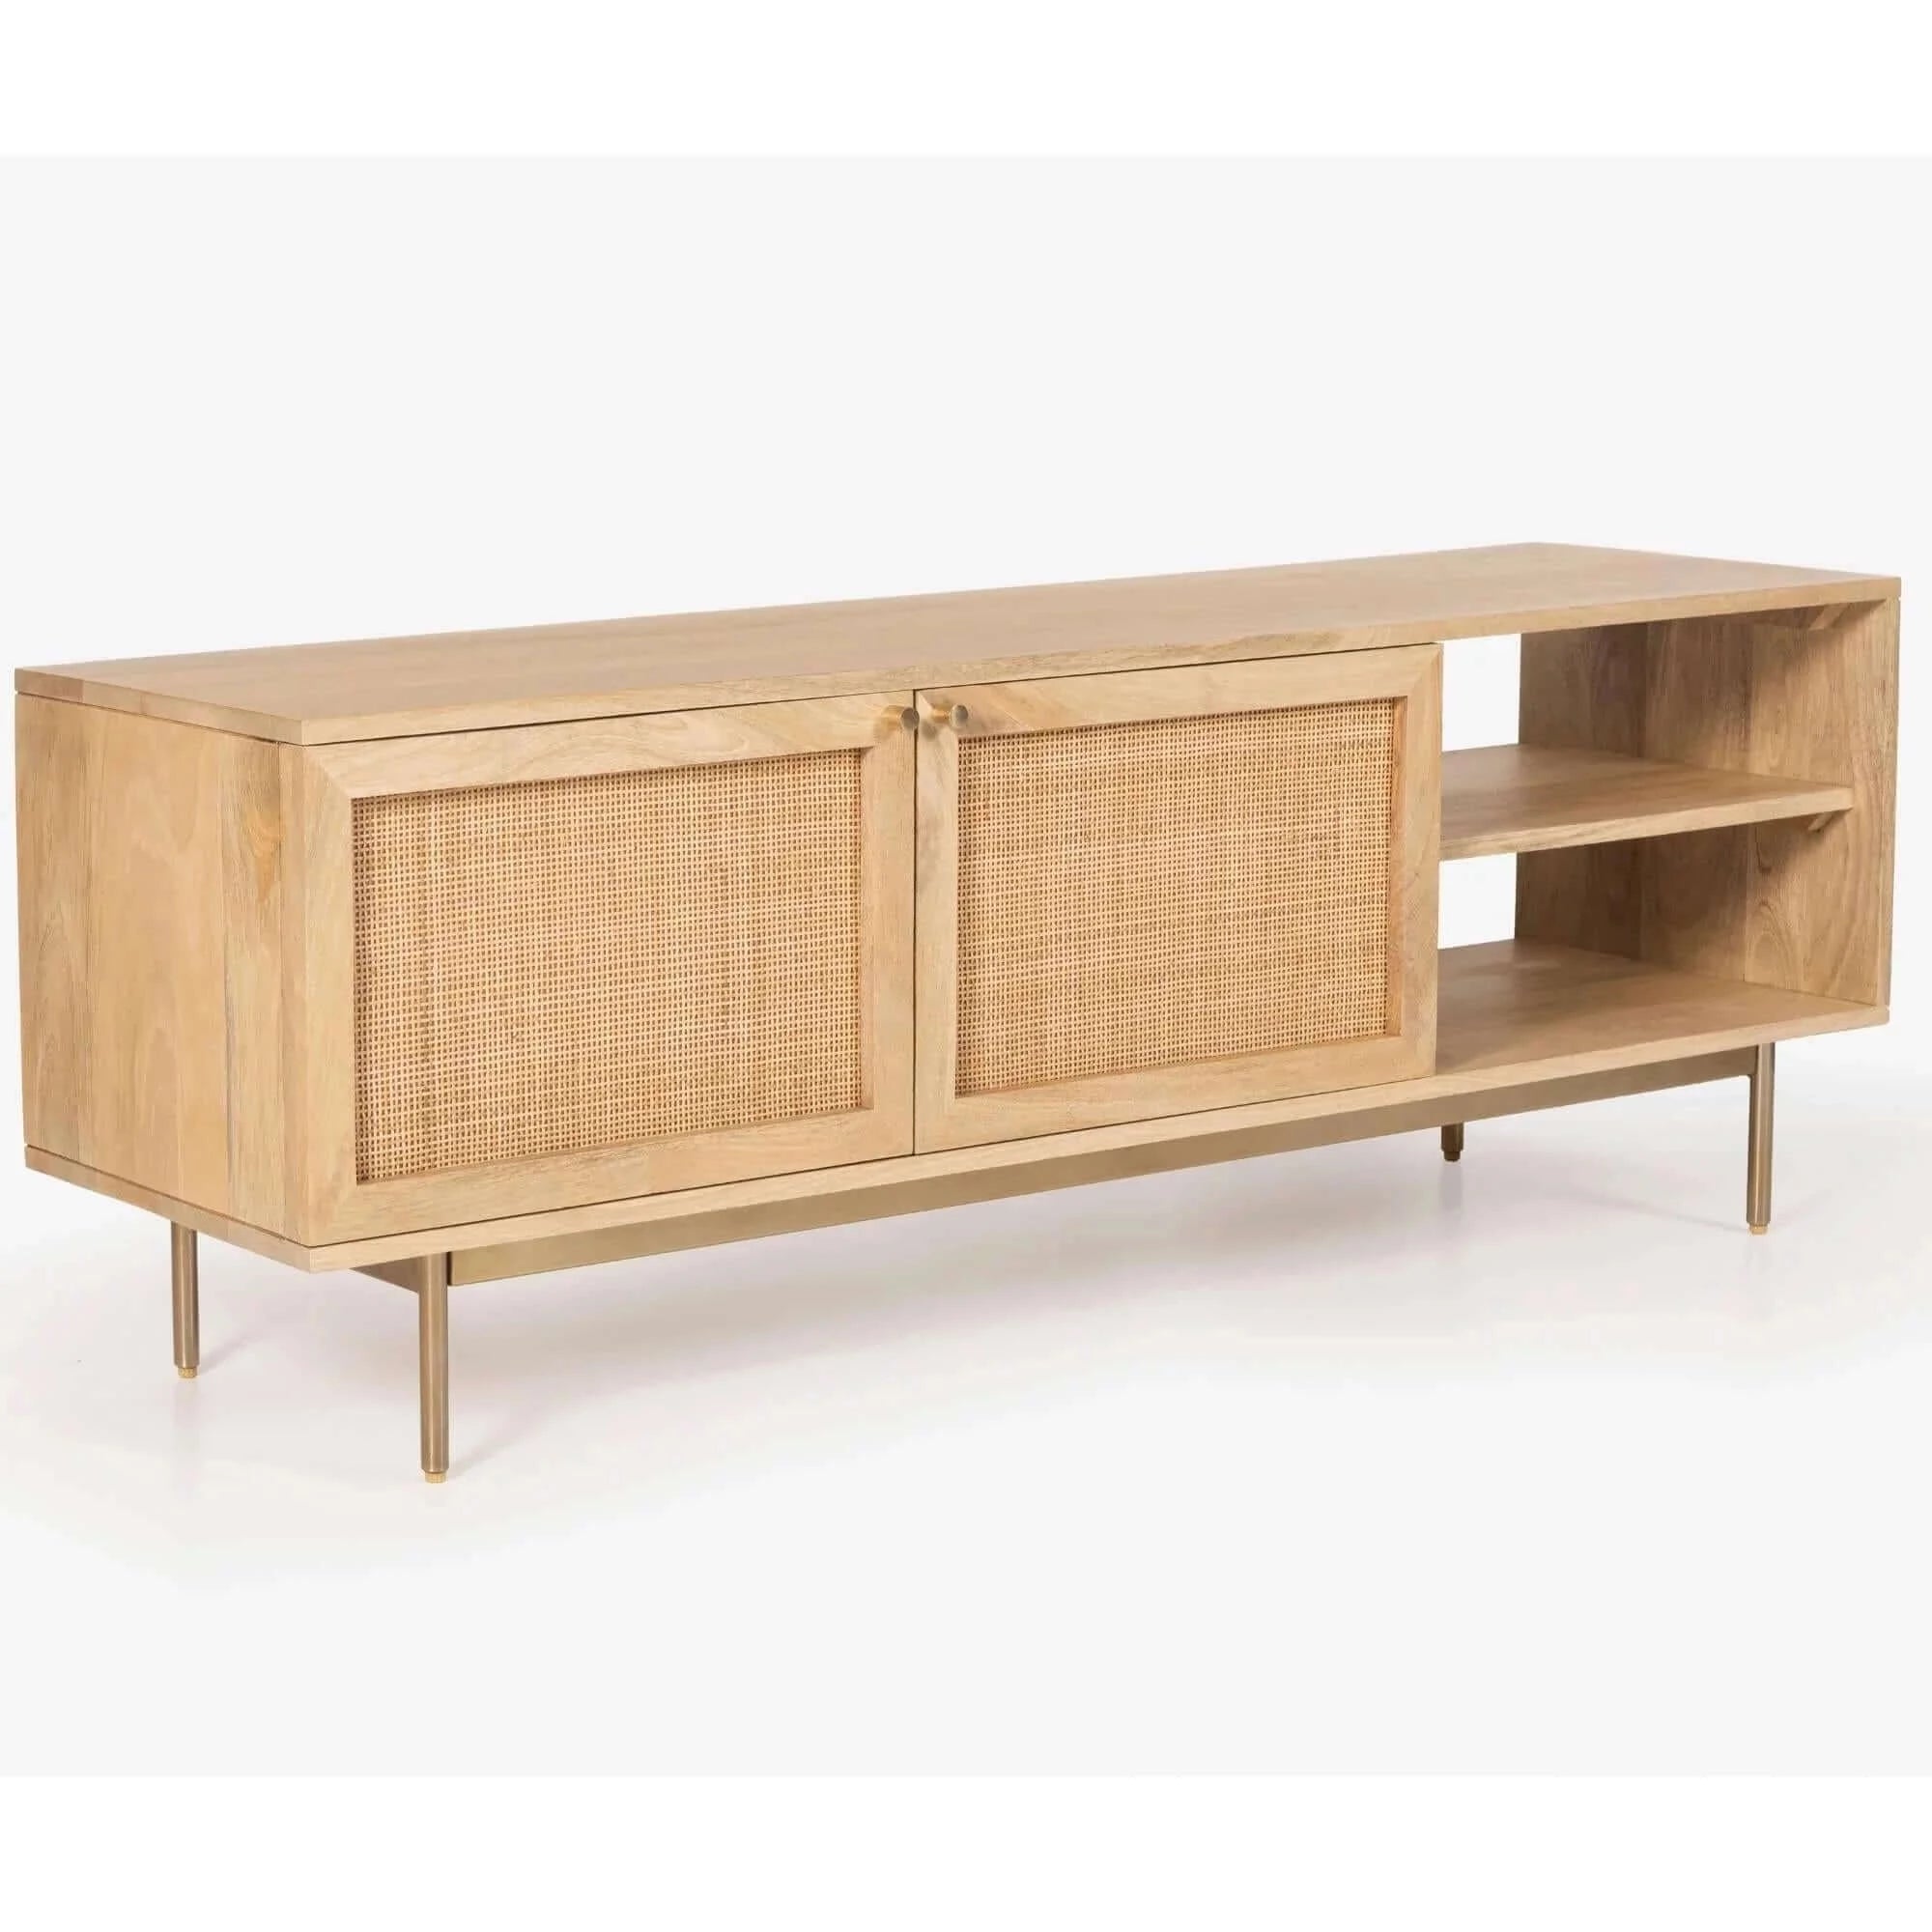 Buy Martina ETU Entertainment TV Unit 147cm Solid Mango Wood Rattan Furniture -Upinteriors